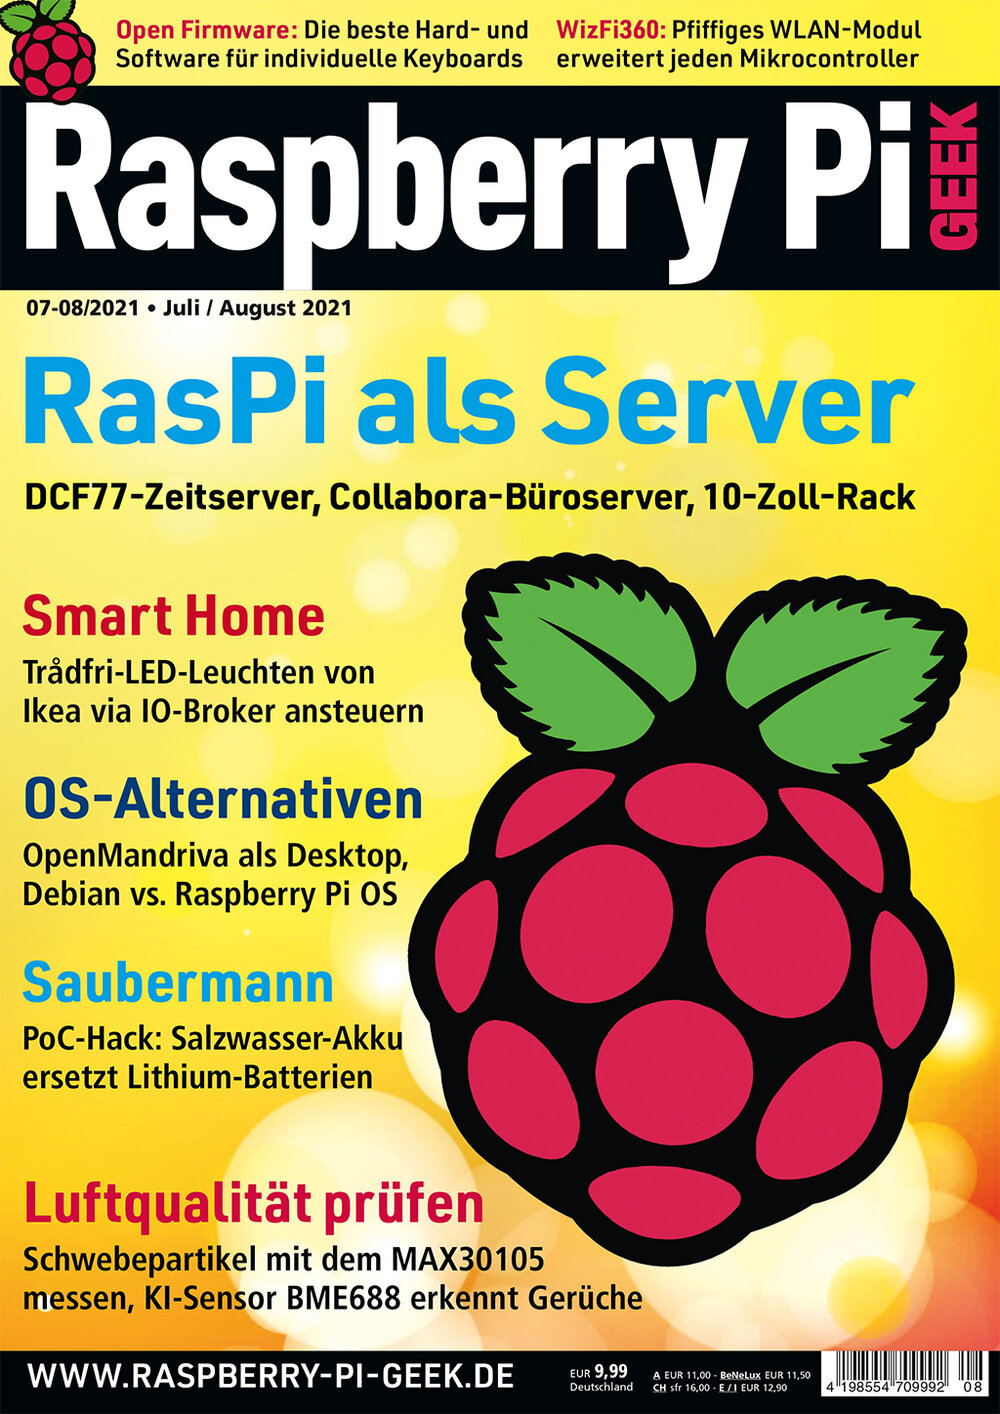 Raspberry Pi Geek ePaper 08/2021